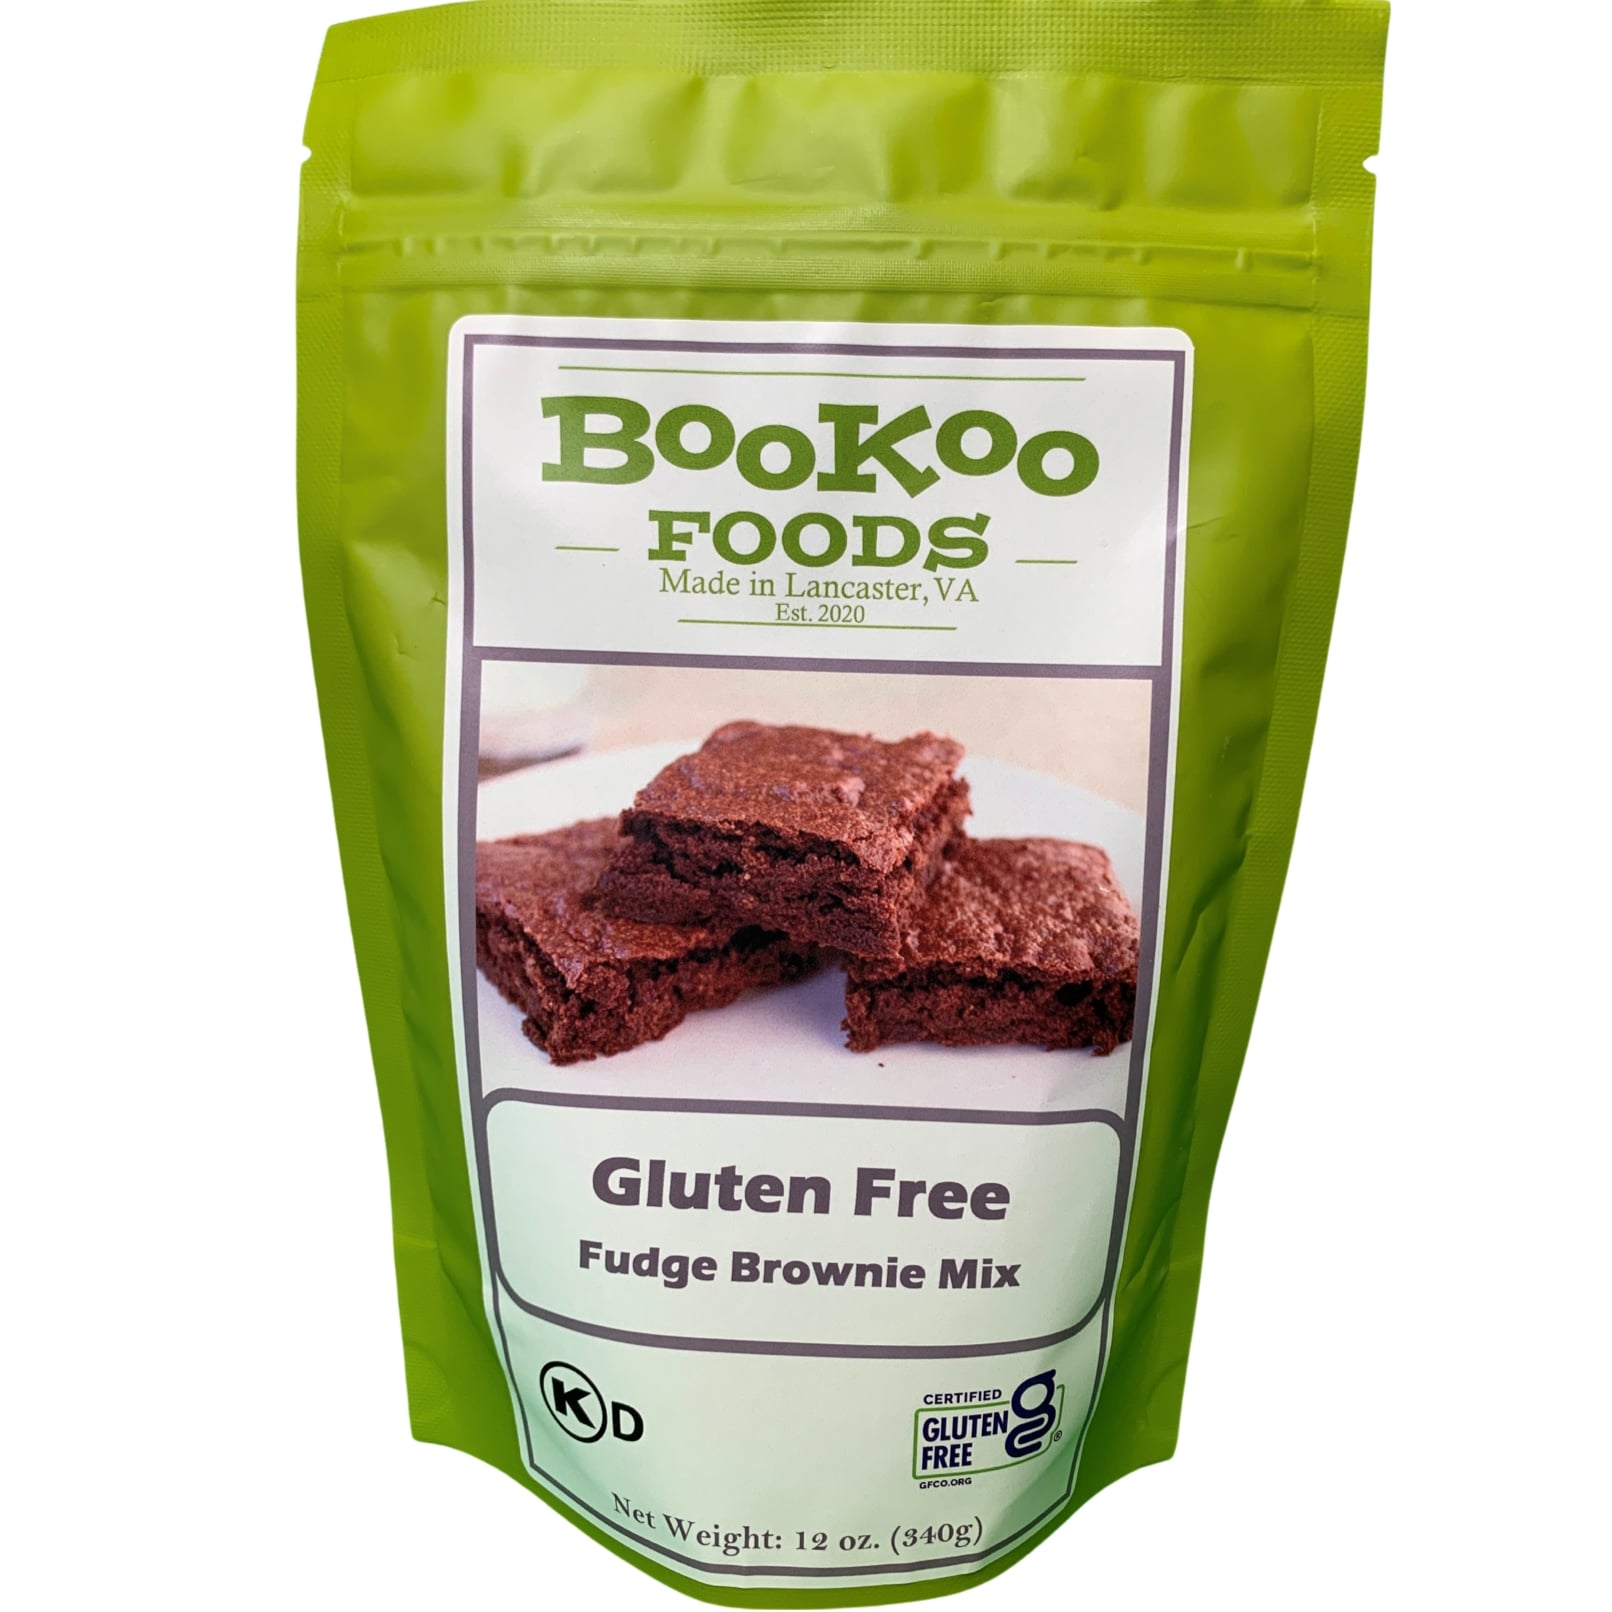 BooKoo Foods - Gluten Free Fudge Brownie Mix